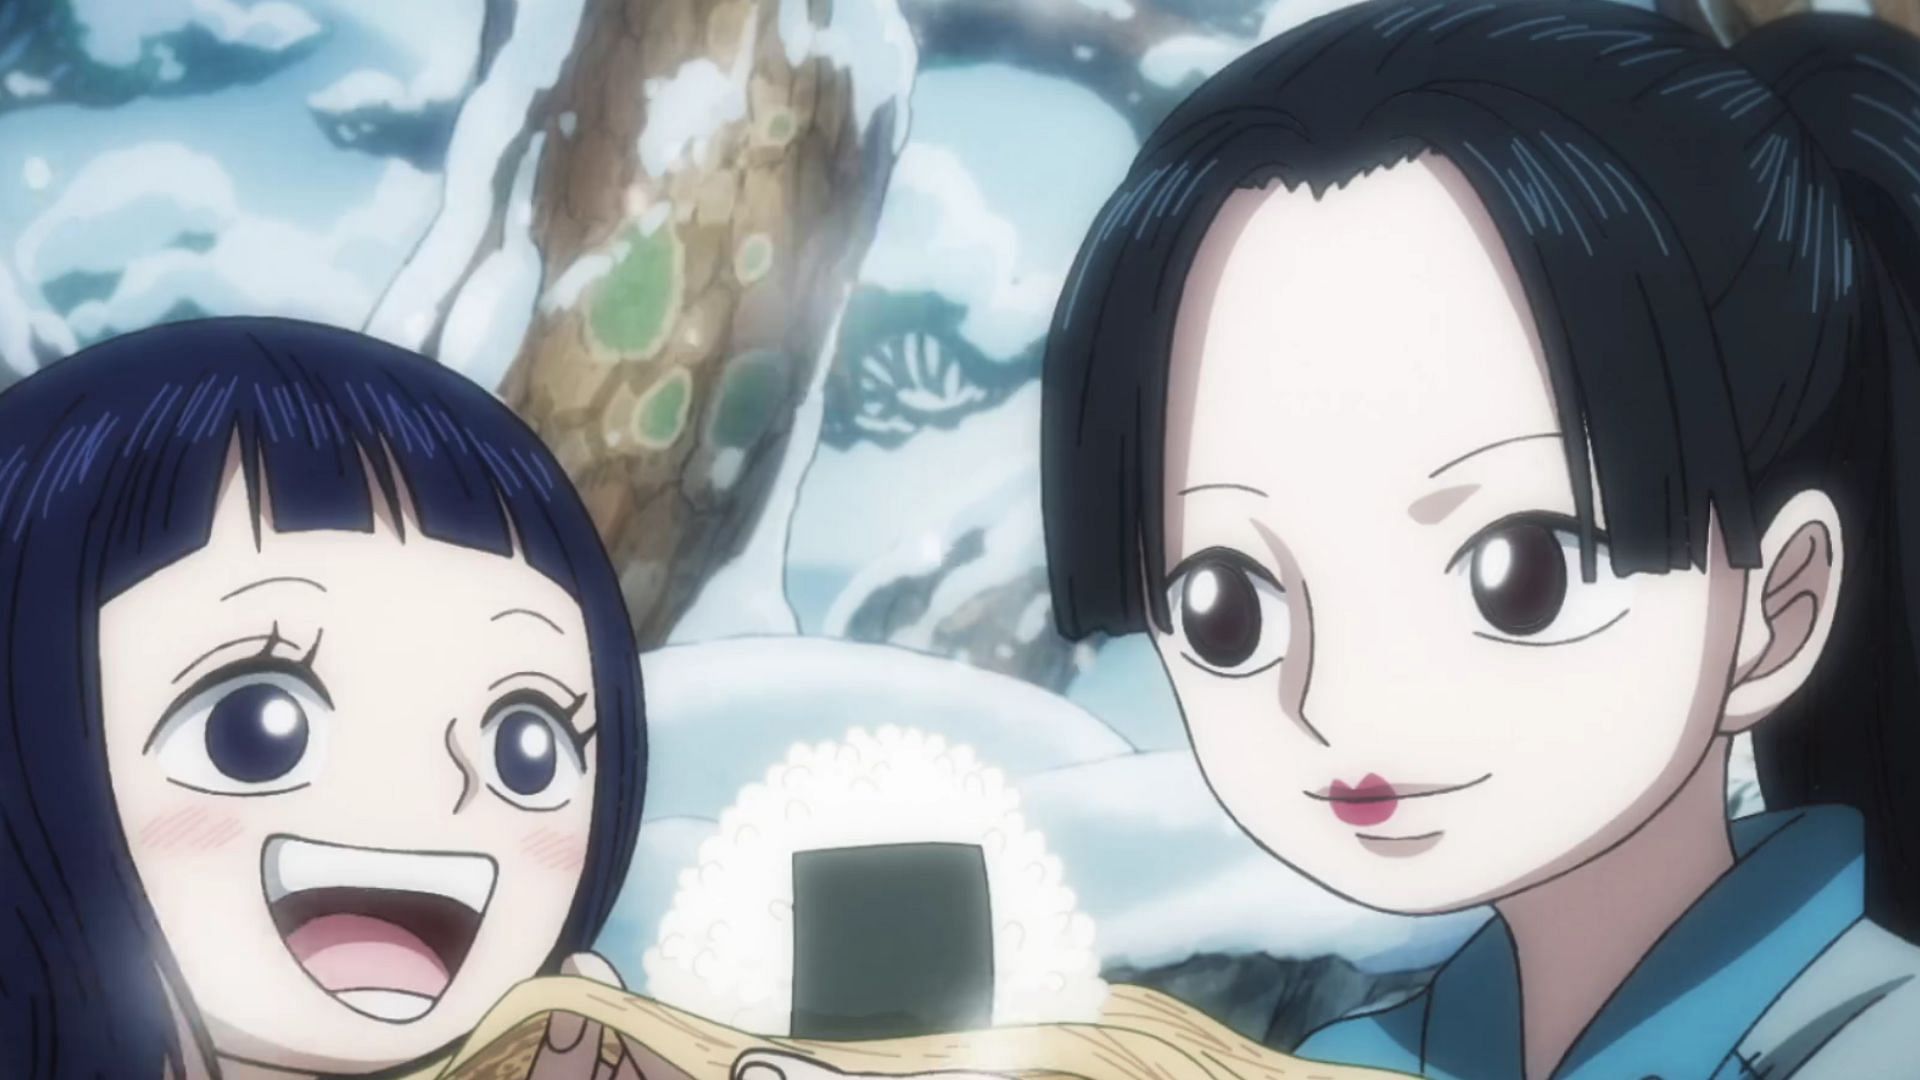 Izo and Kiku as shown in the One Piece anime (Image via Toei Animation)